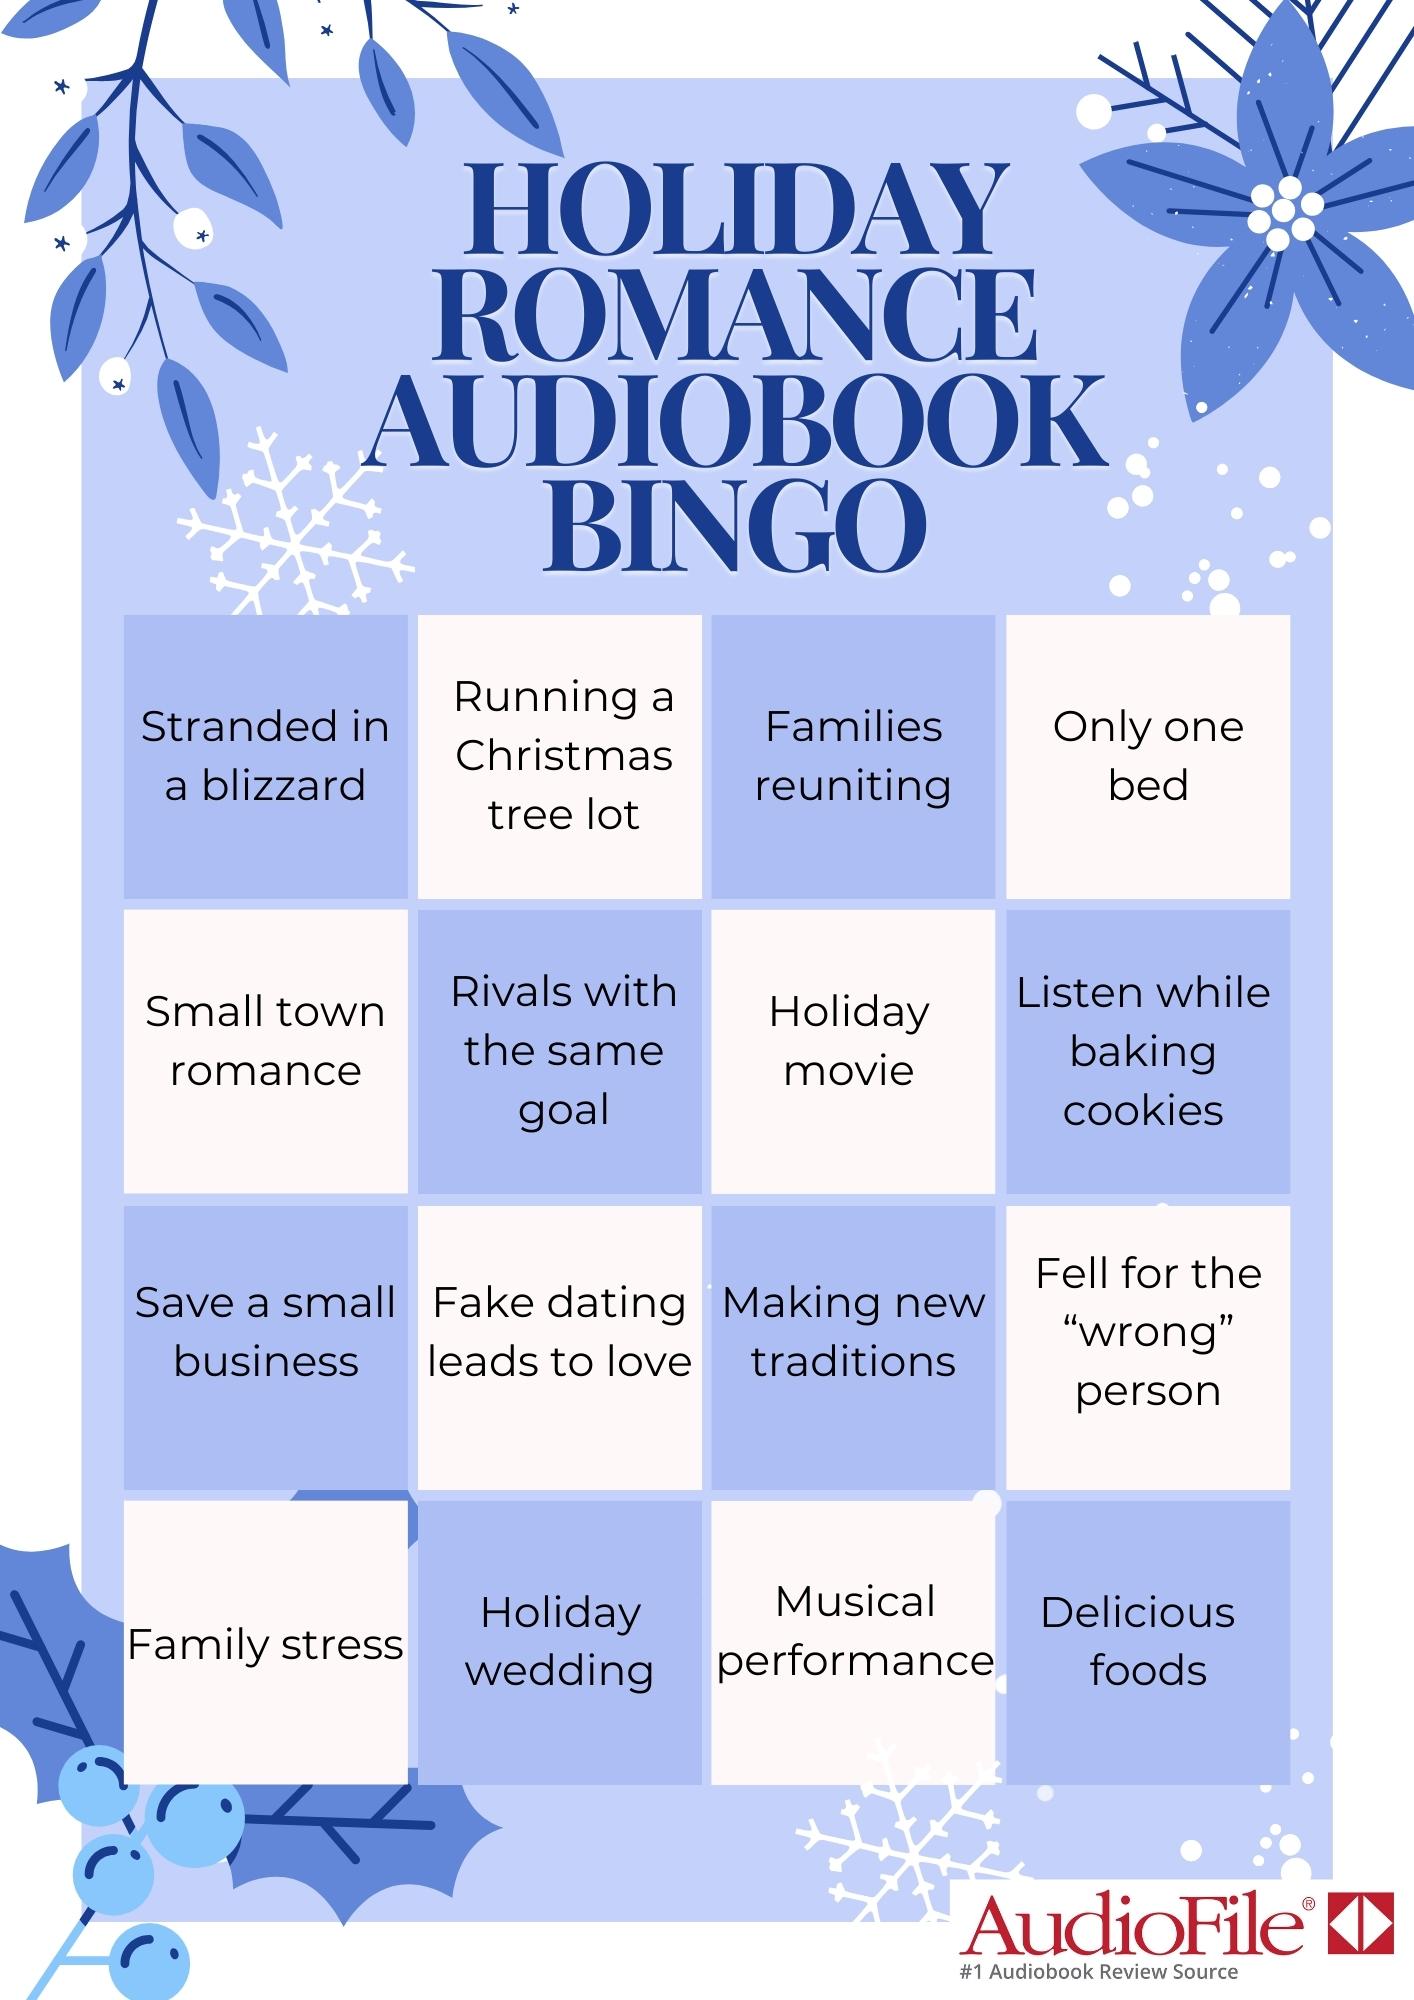 Holiday romance audiobook bingo